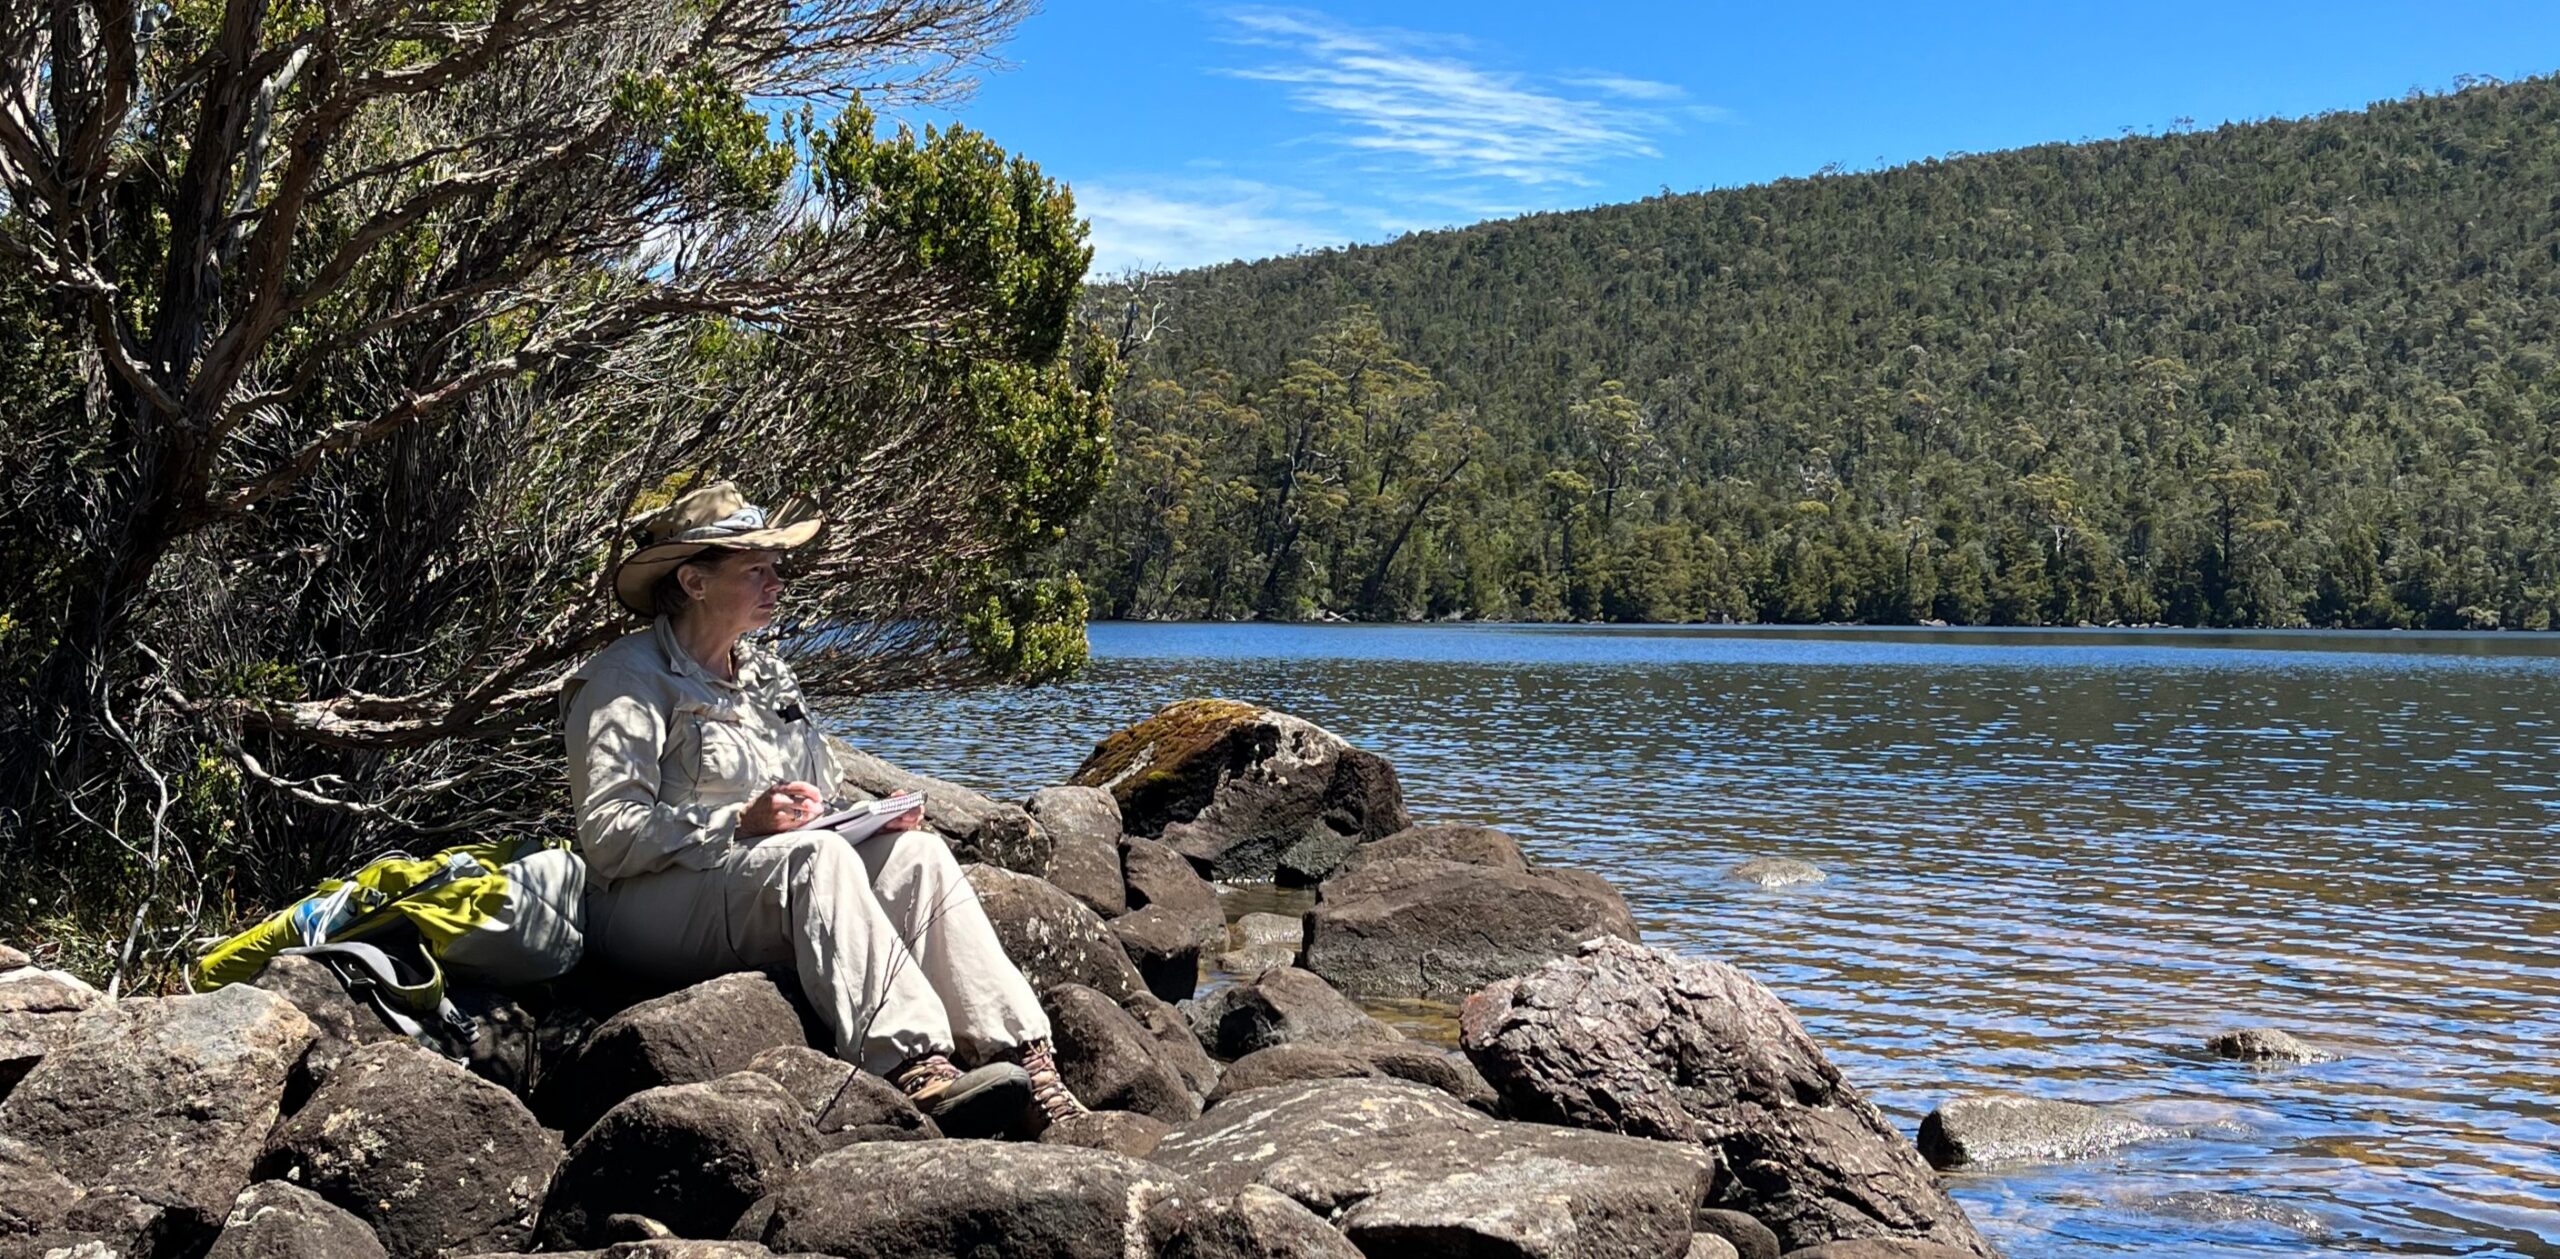 Artist Wendy Galloway enjoying the Tasmania landscape to sketch